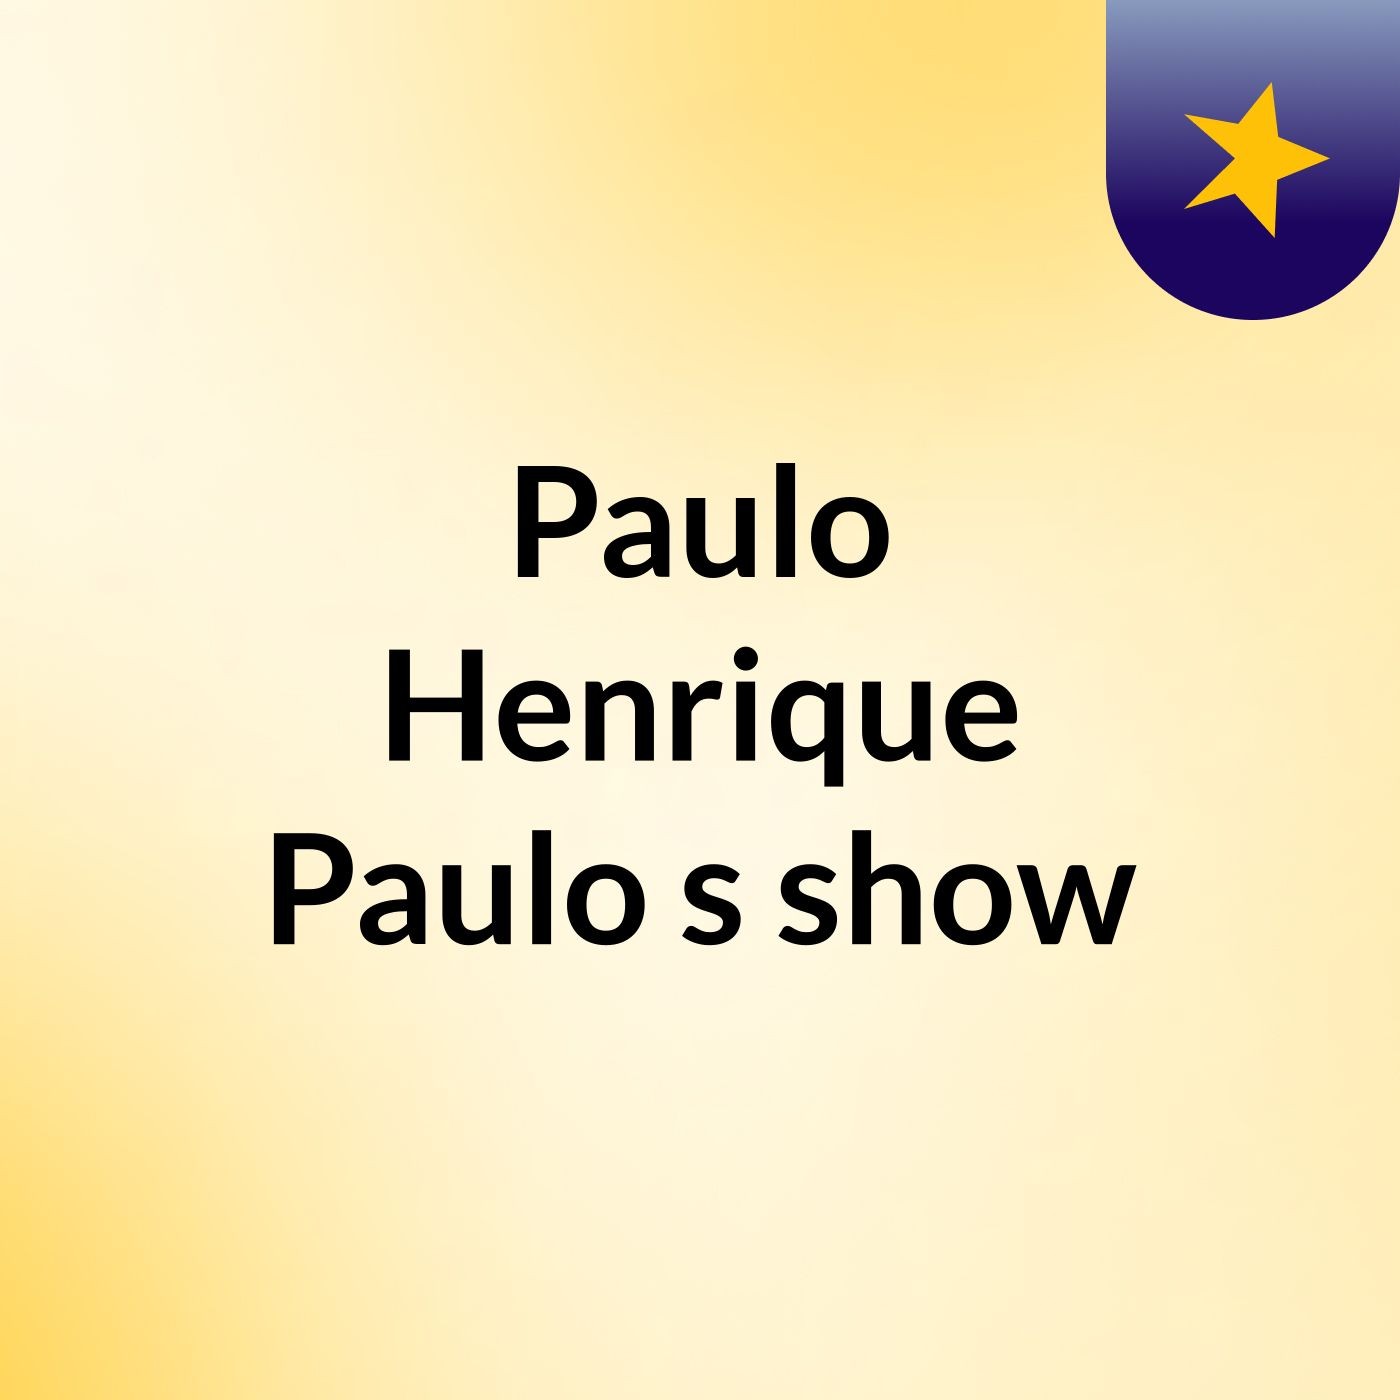 Paulo Henrique Paulo's show